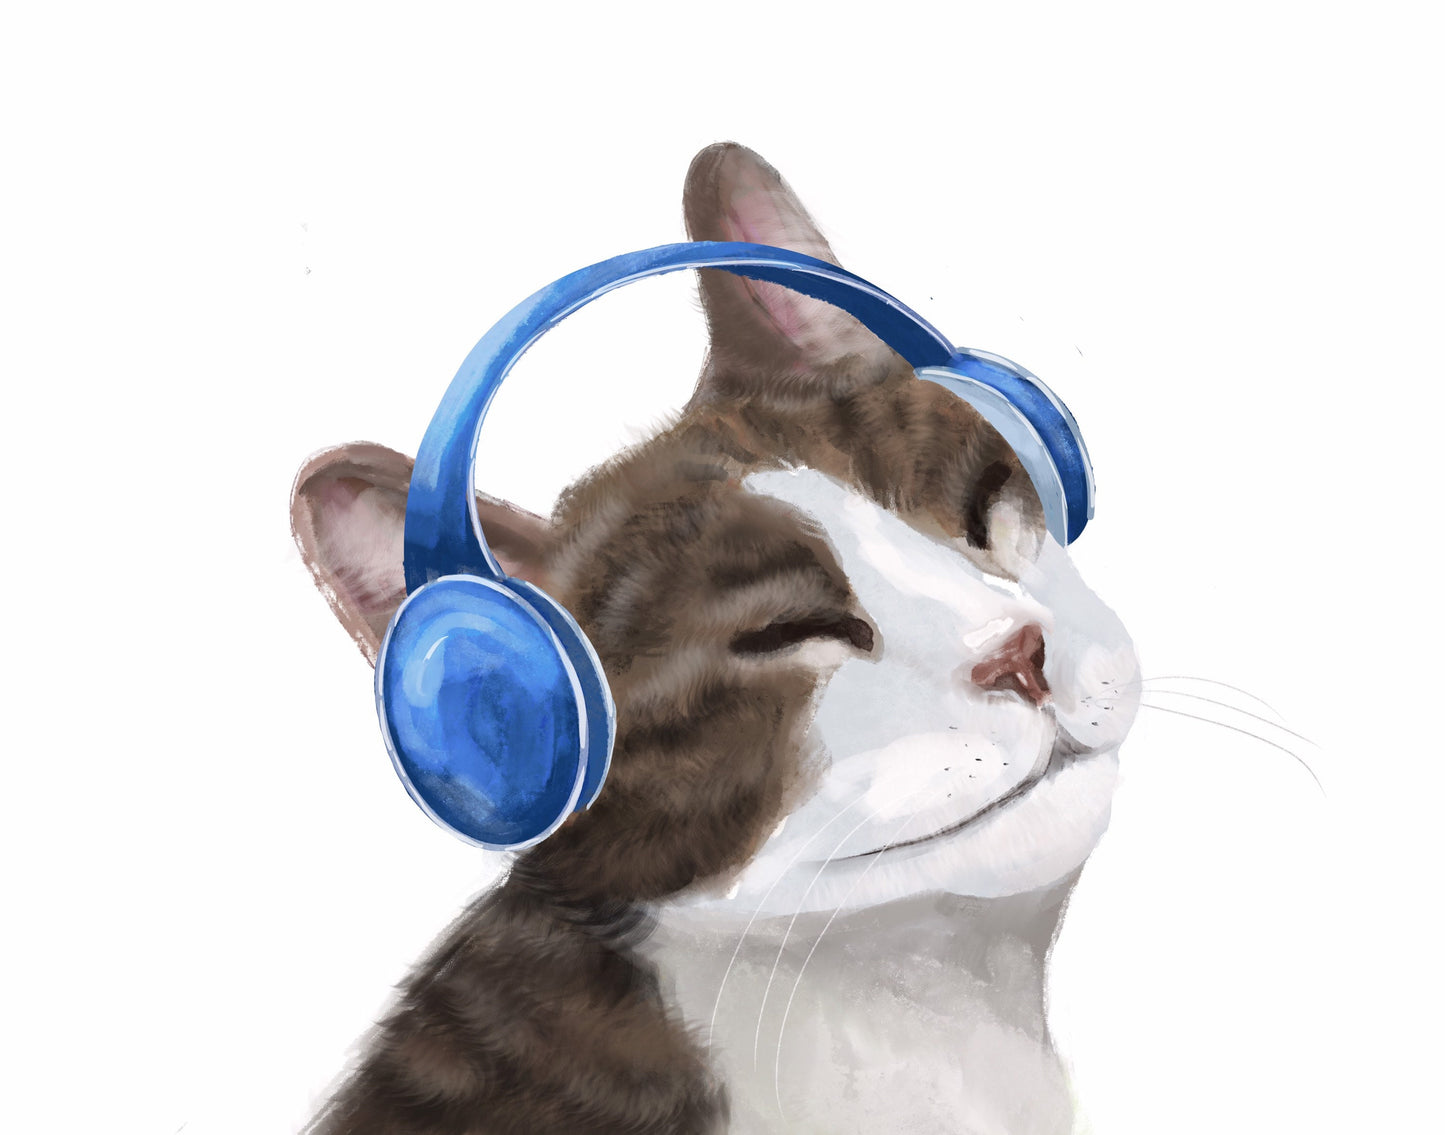 Gray Tabby Cat Listening Music With Headphones Print